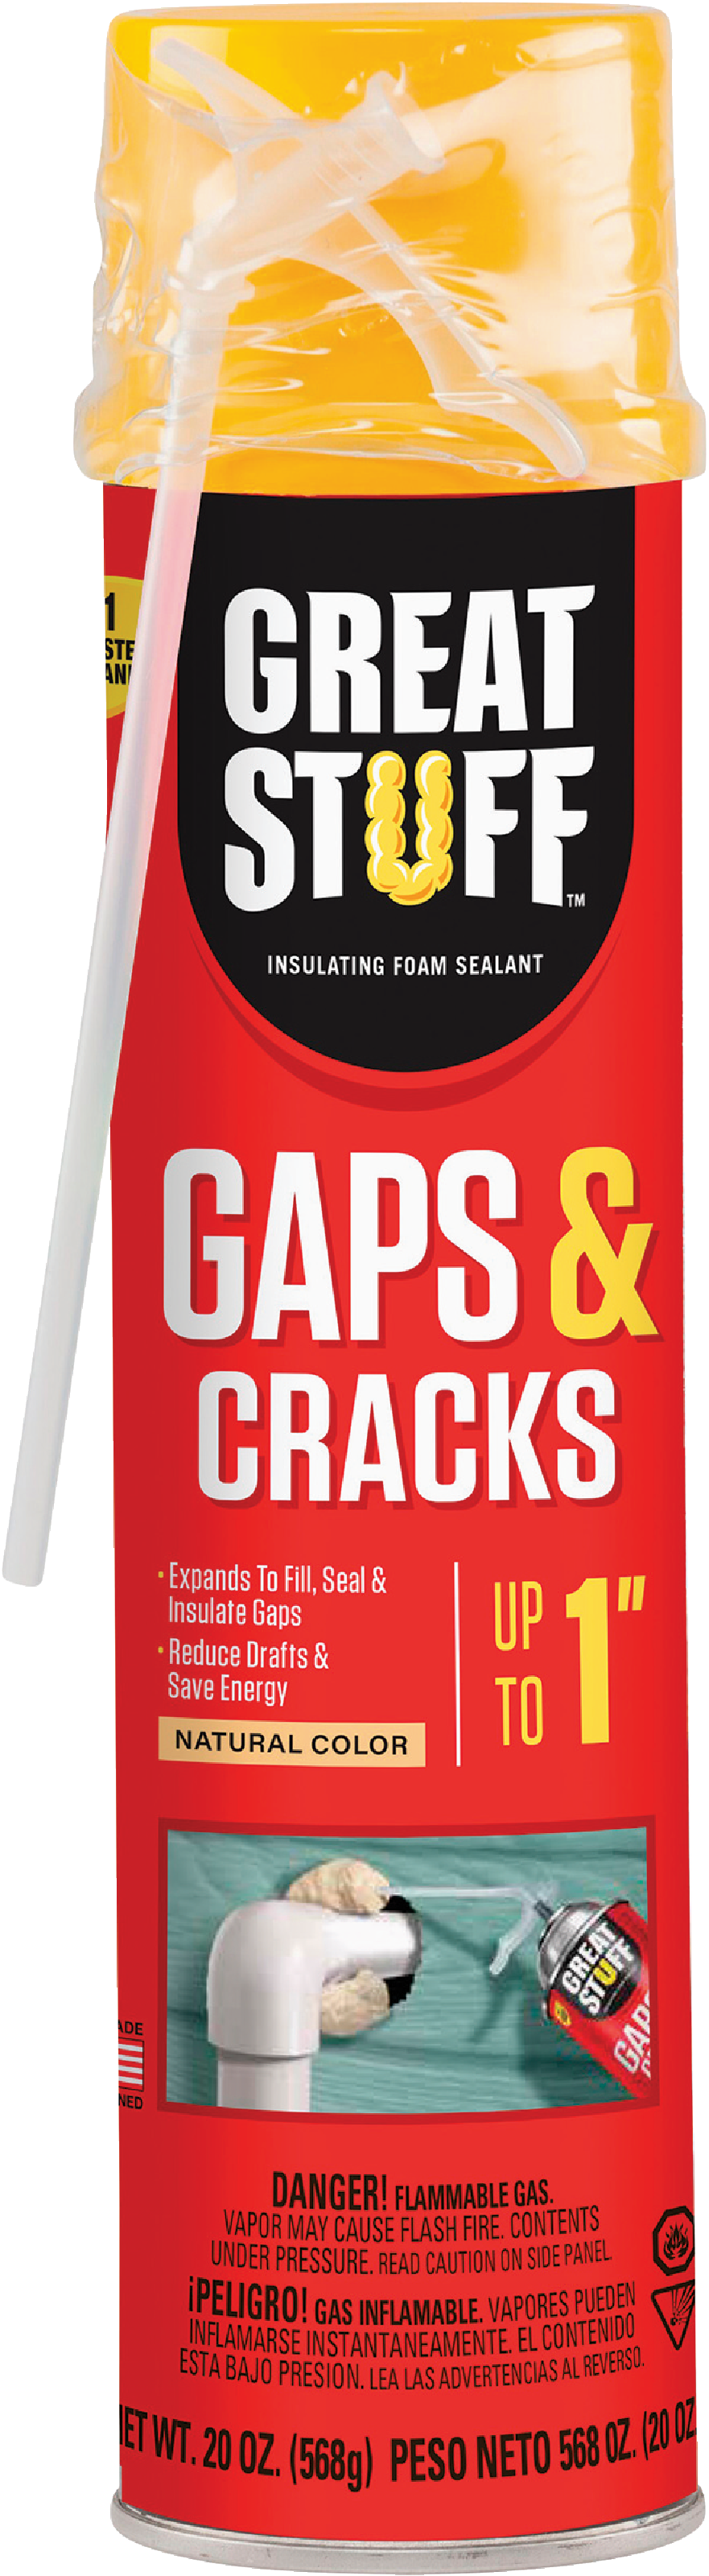 Great Stuff Gaps and Cracks Spray Foam Insulation, 12 oz